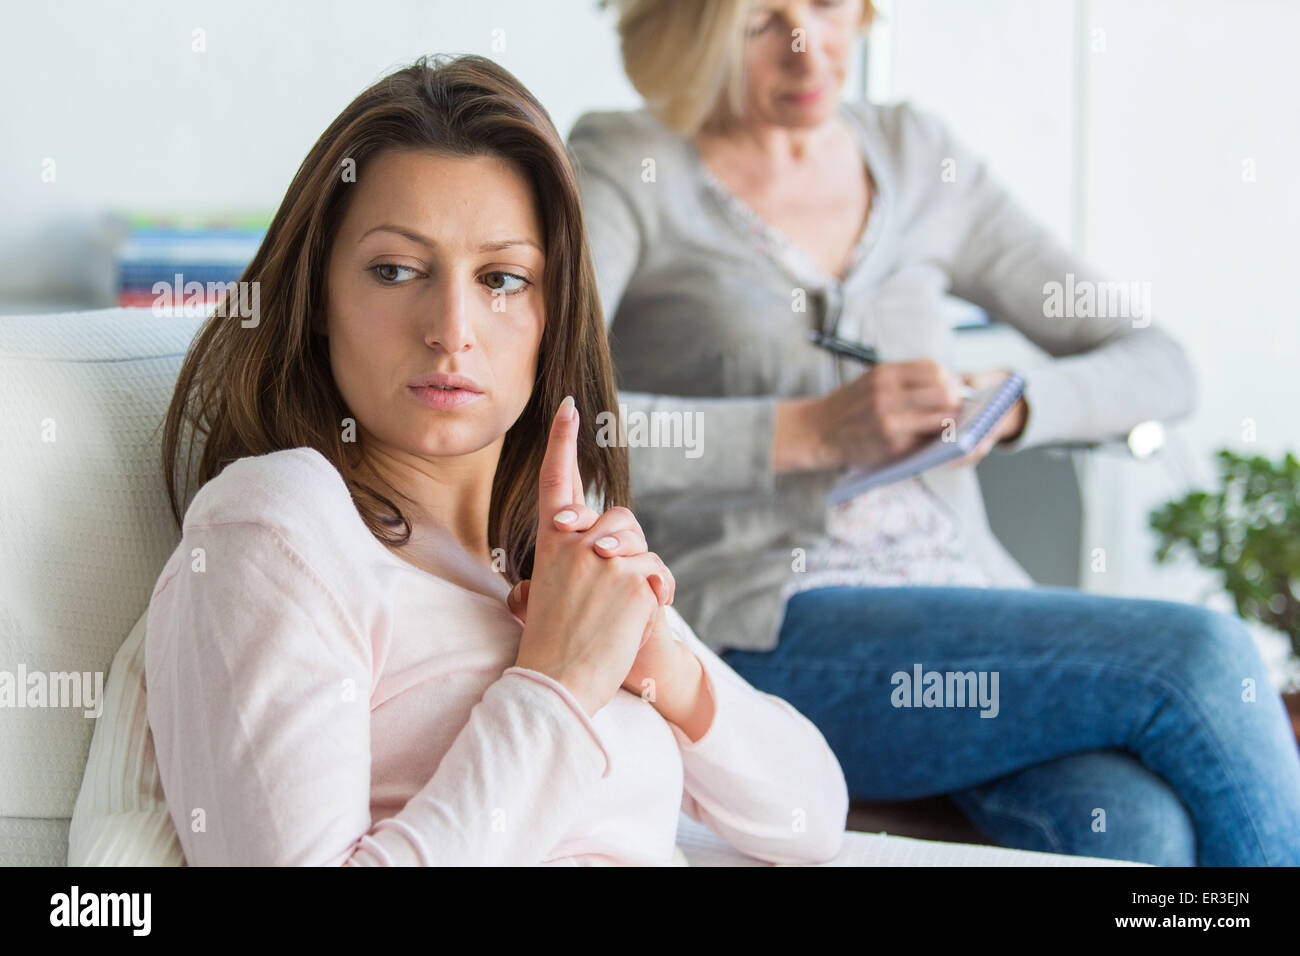 Two women having a conversation. Stock Photo